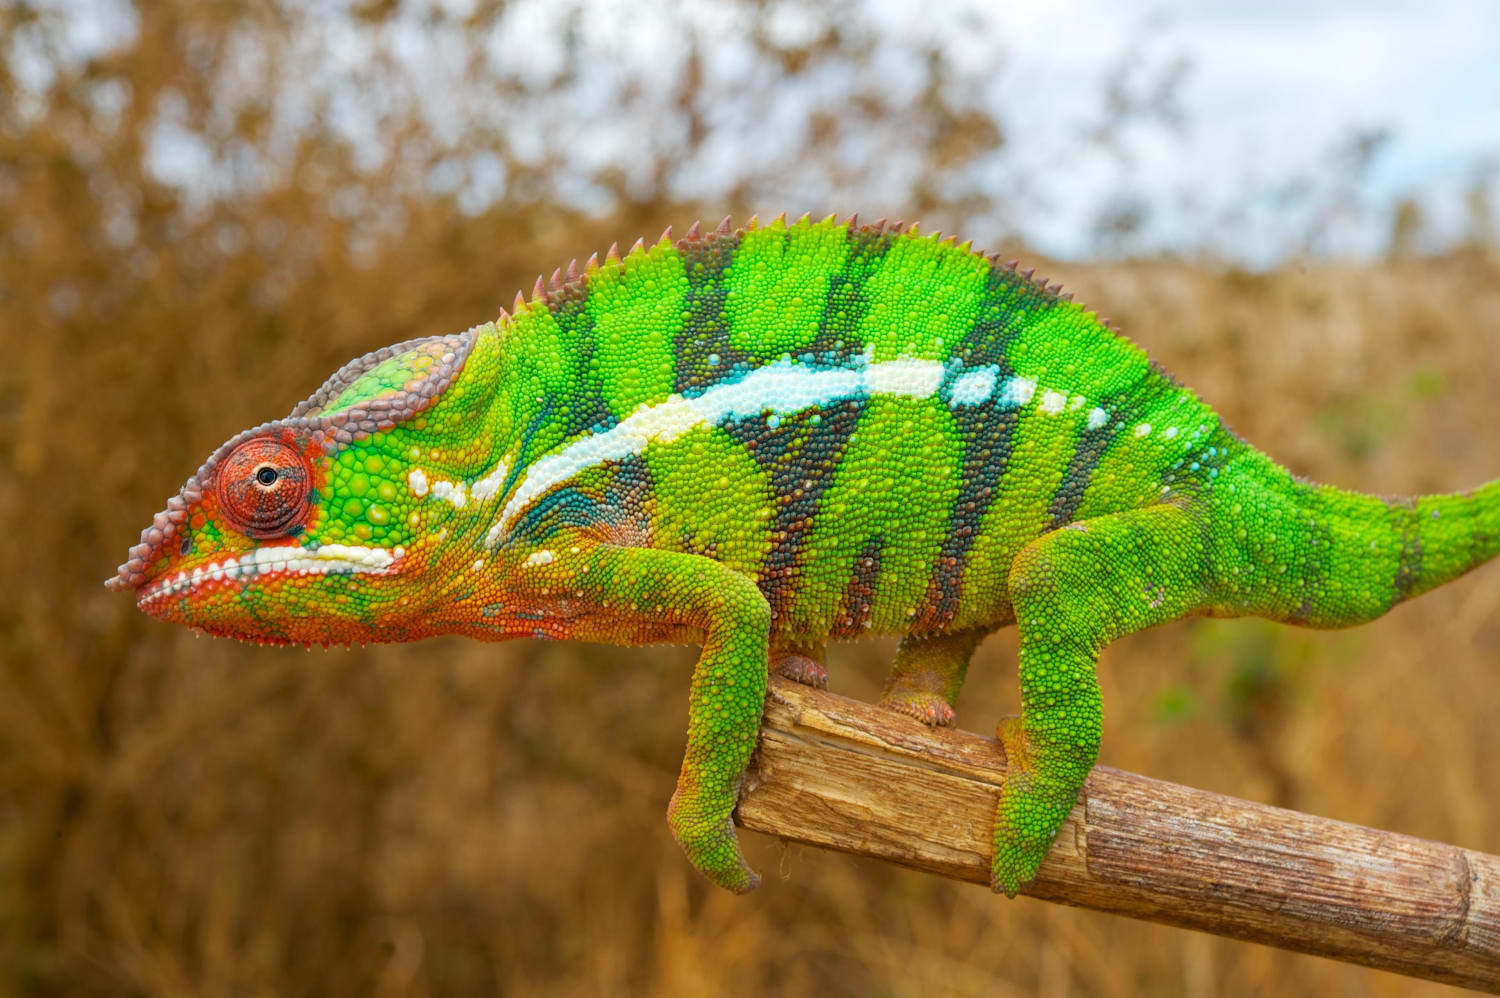 Researchers Explain How Chameleons Change Color